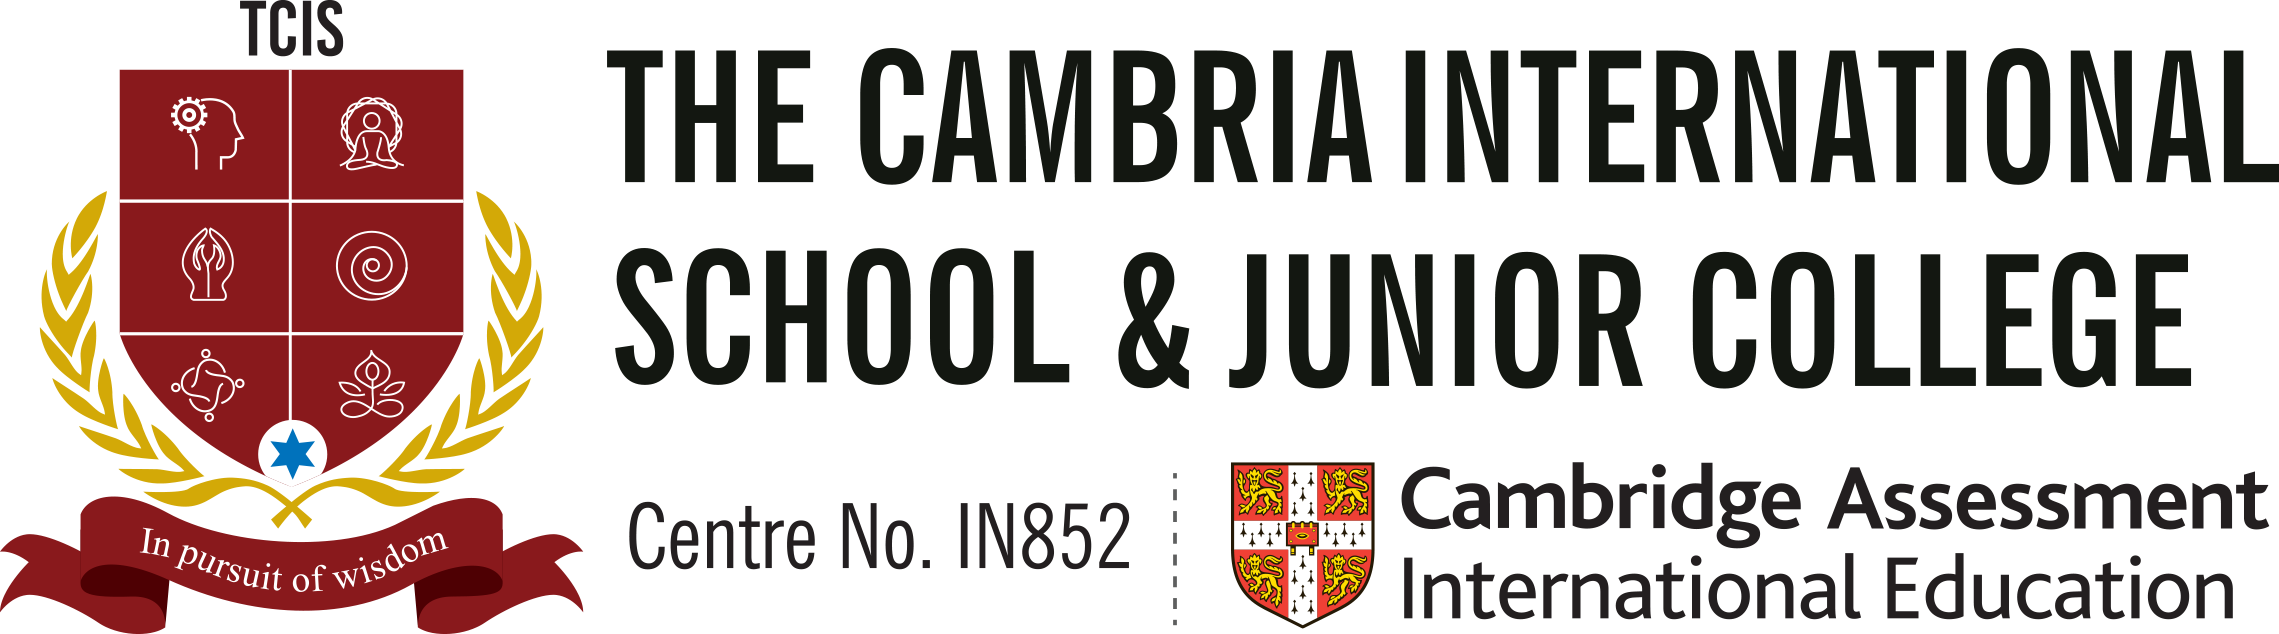 Cambria International School